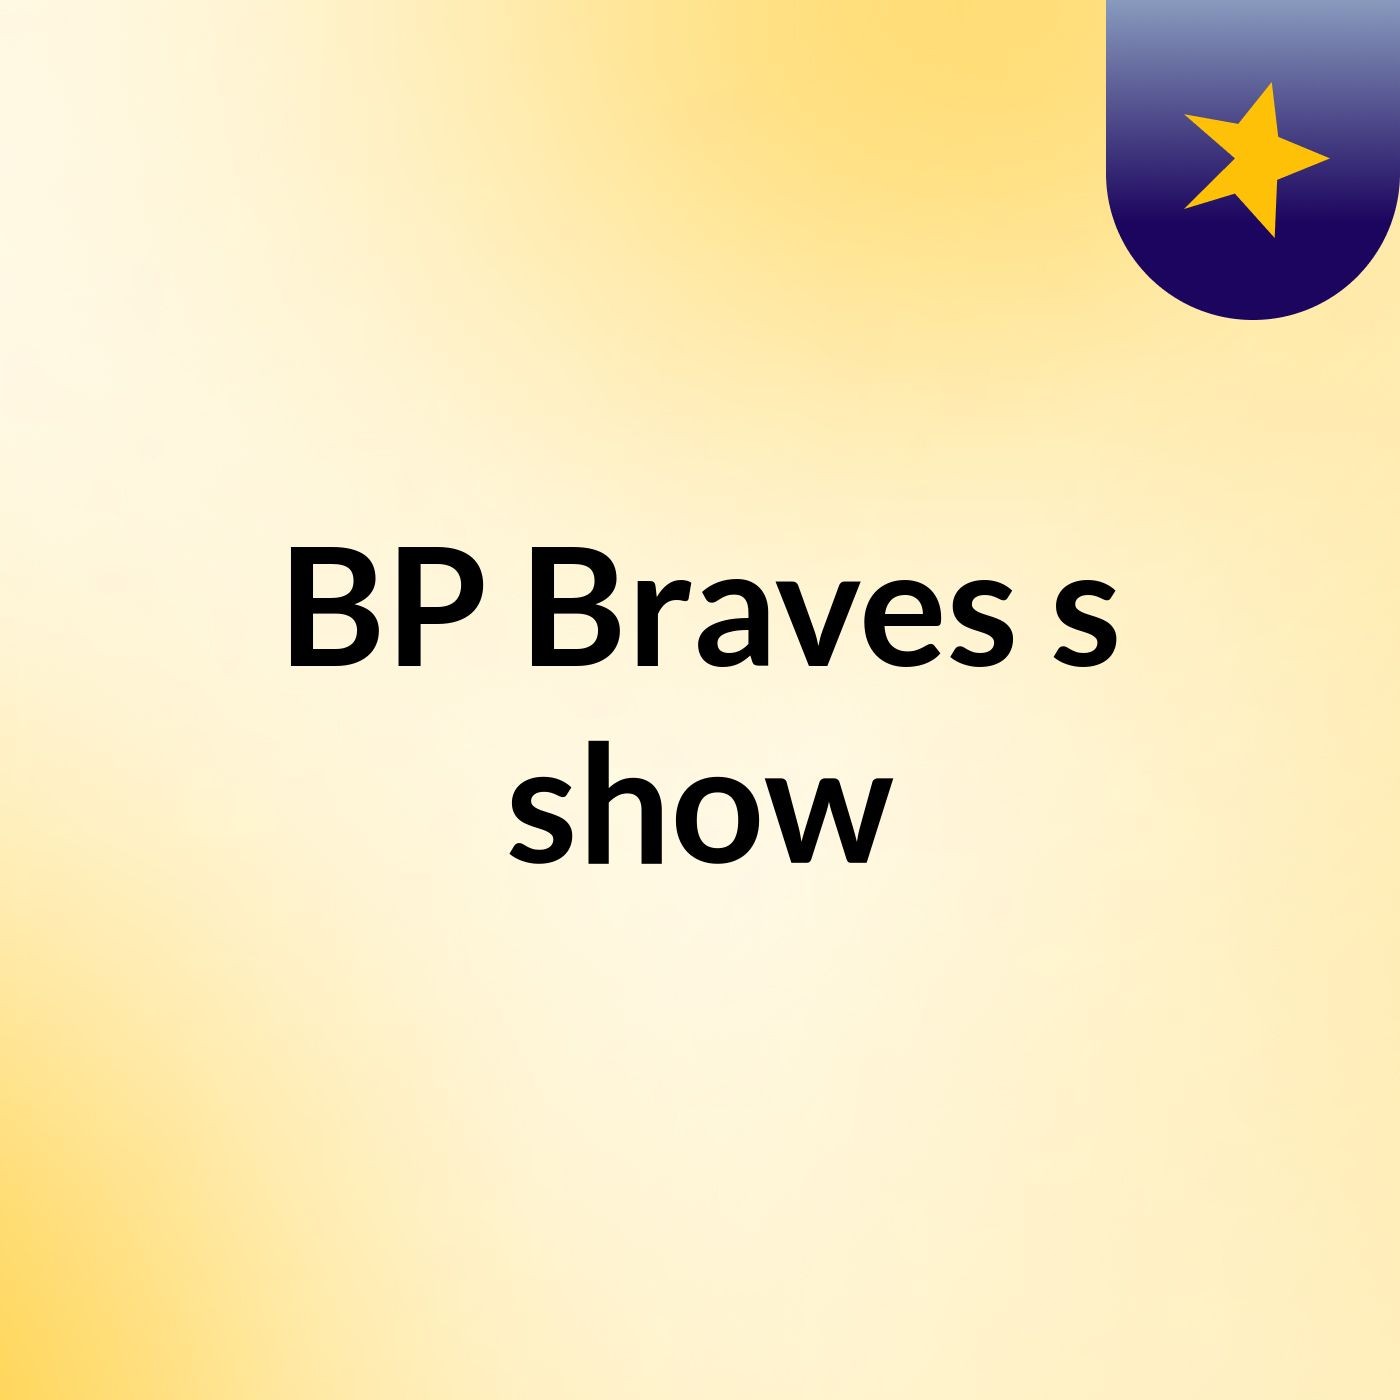 BP Braves's show